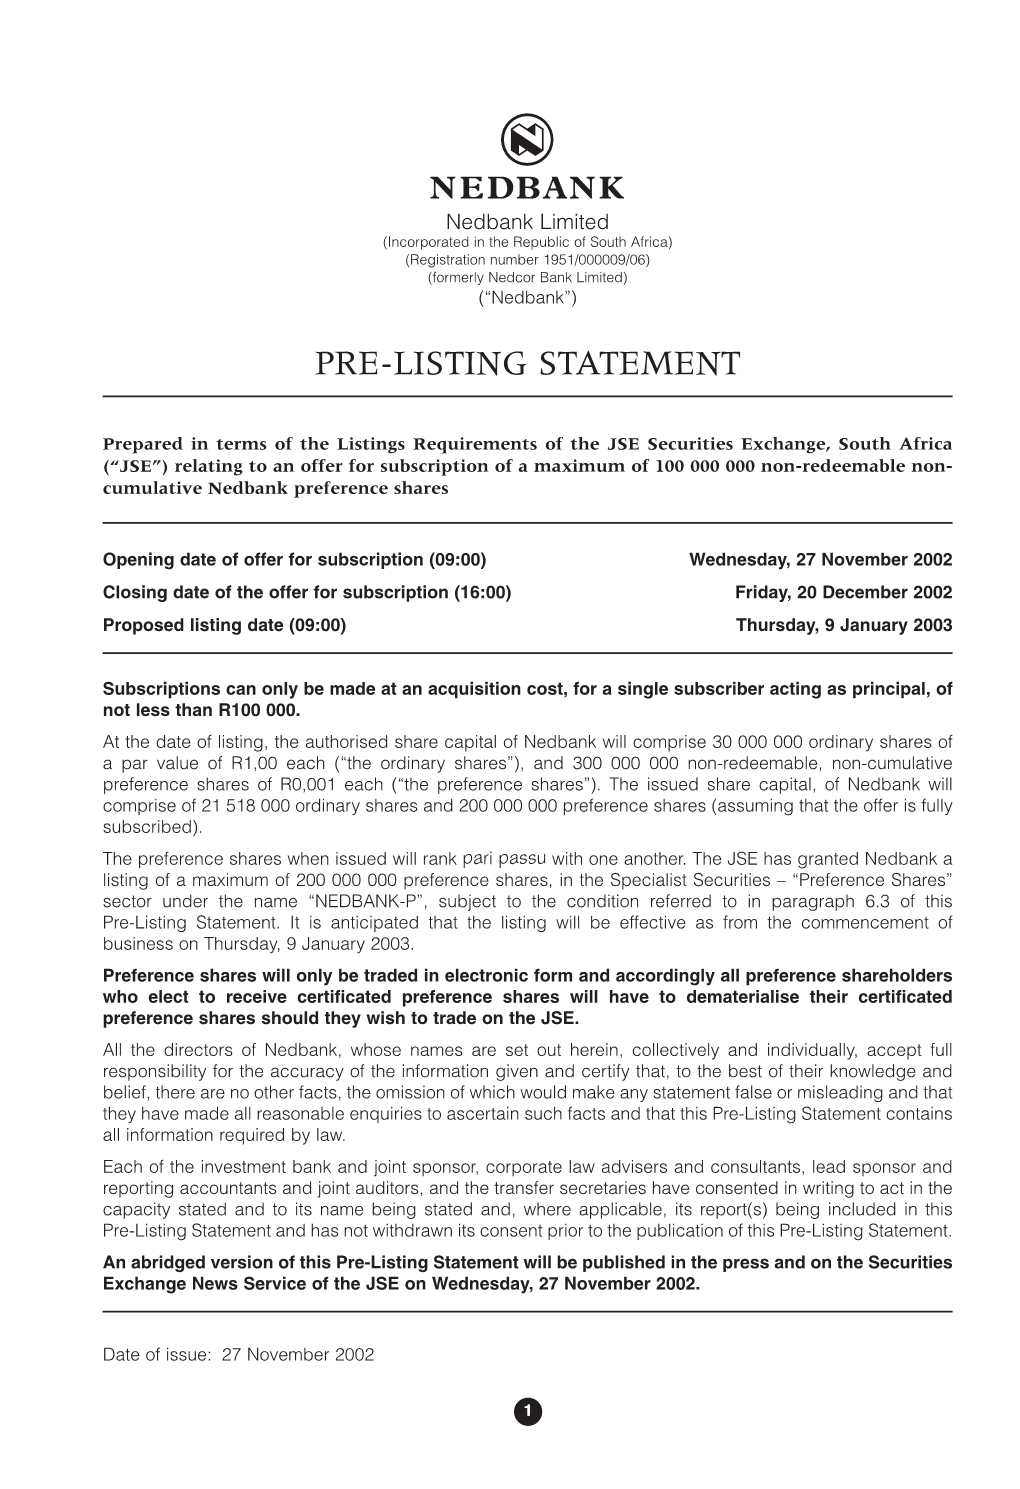 Nedbank Ltd Preference Shares Pre-Listing Statement